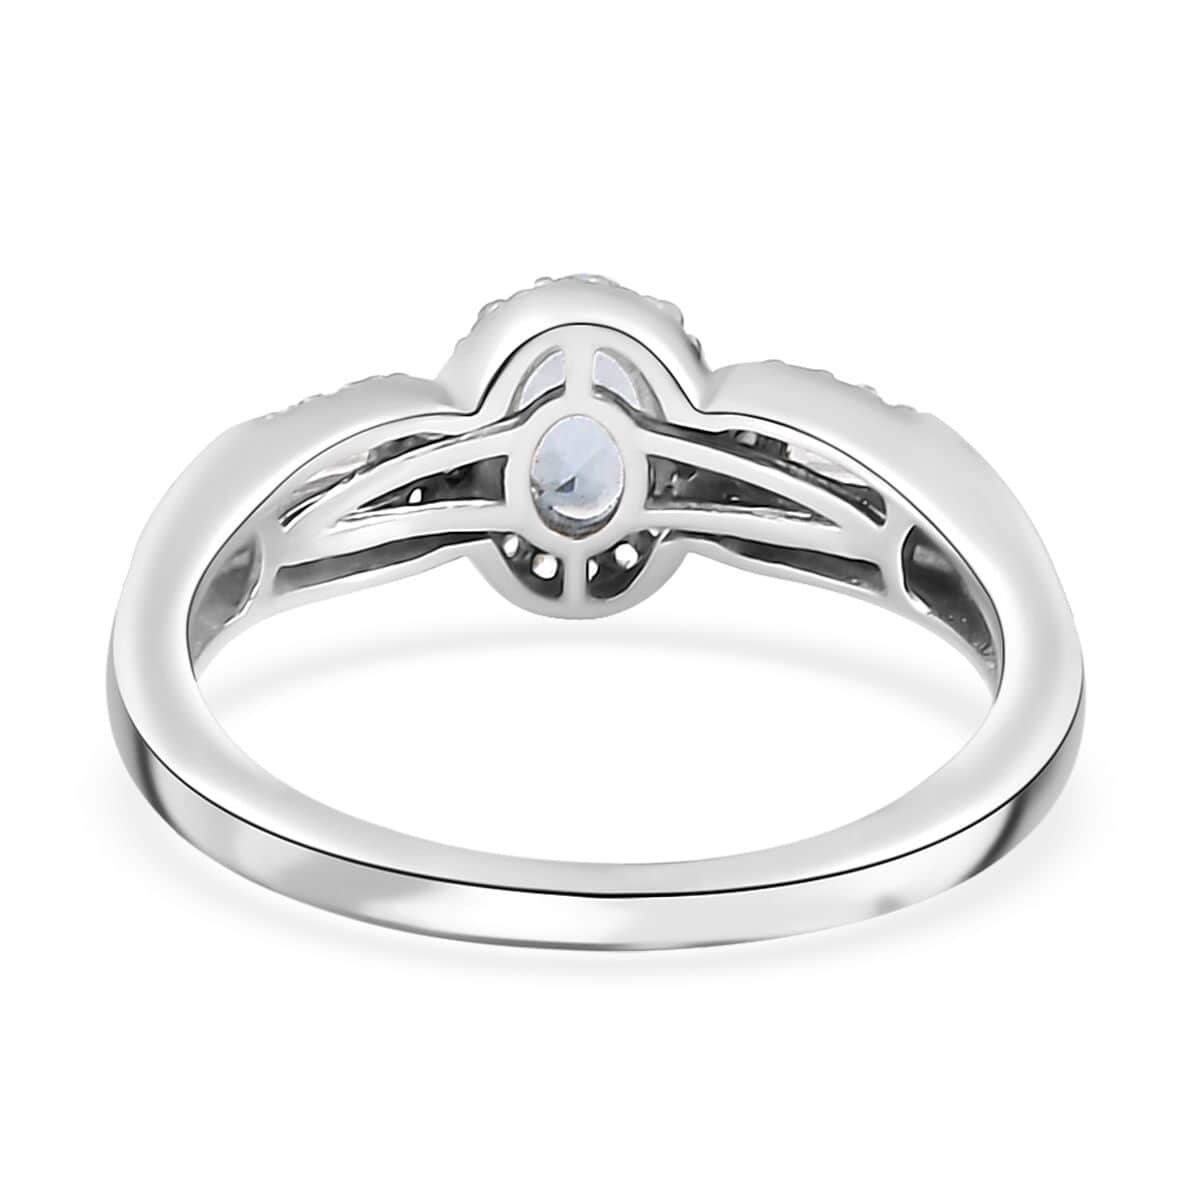 Premium Mangoro Aquamarine and White Zircon Ring in Platinum Over Sterling Silver (Size 10.0) 0.75 ctw image number 4